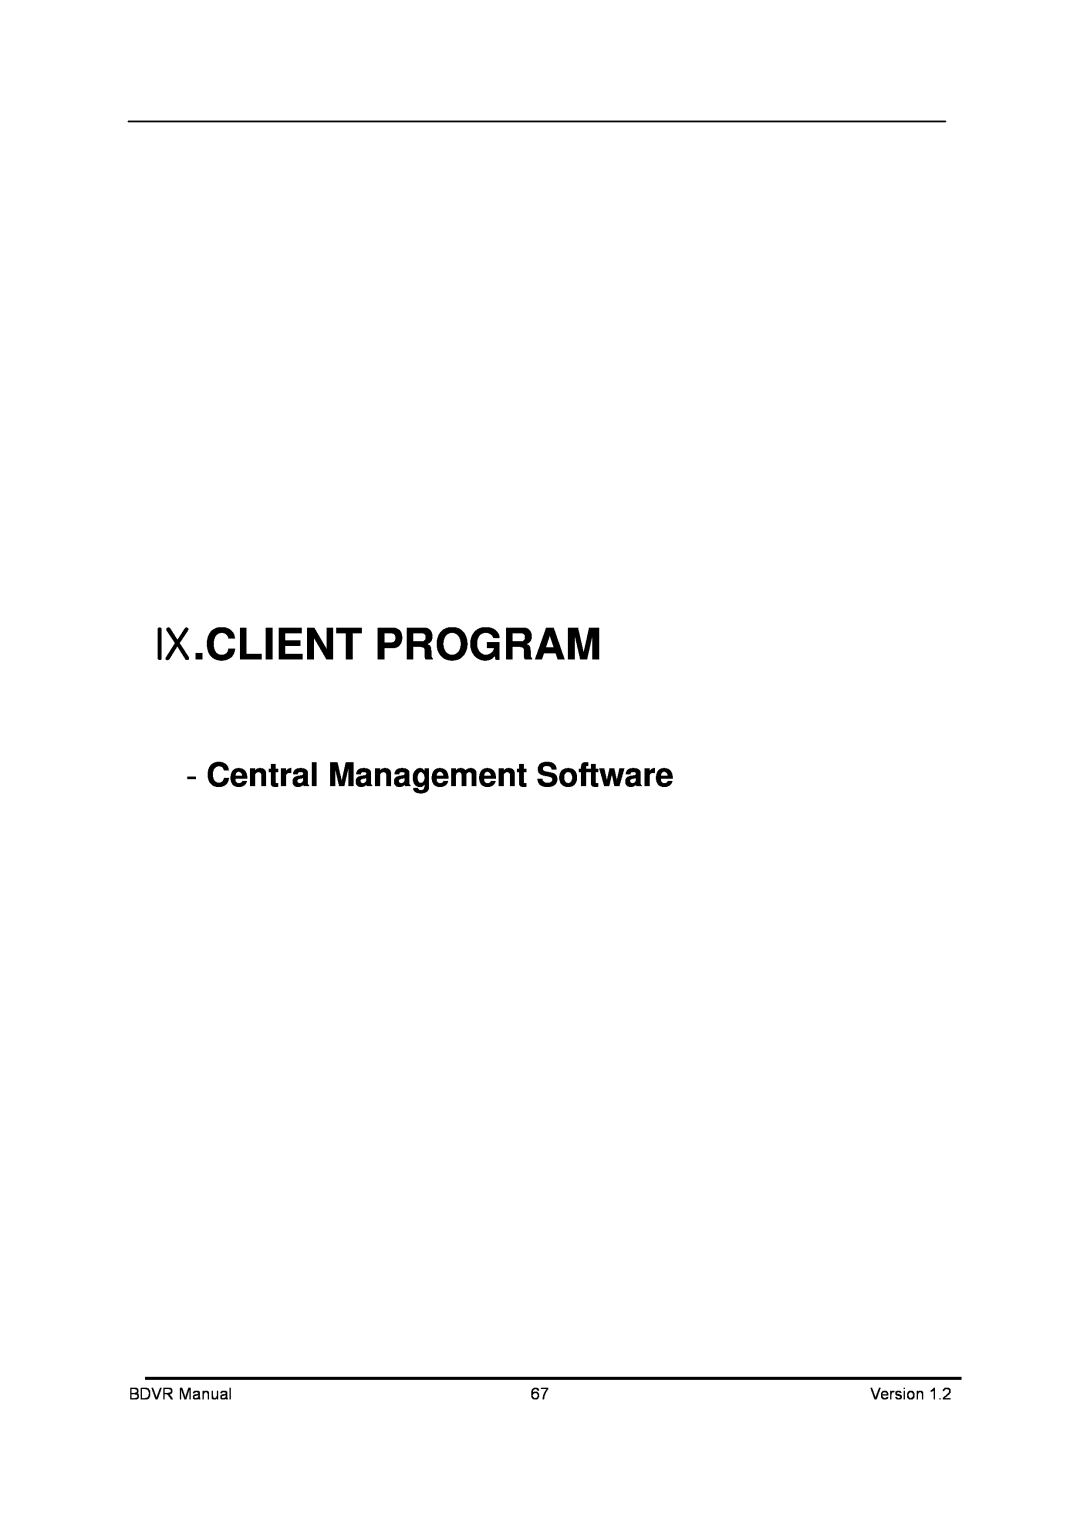 Genie BDVR-4, BDVR-8, BDVR-16 manual Ⅸ.CLIENT PROGRAM, Central Management Software 